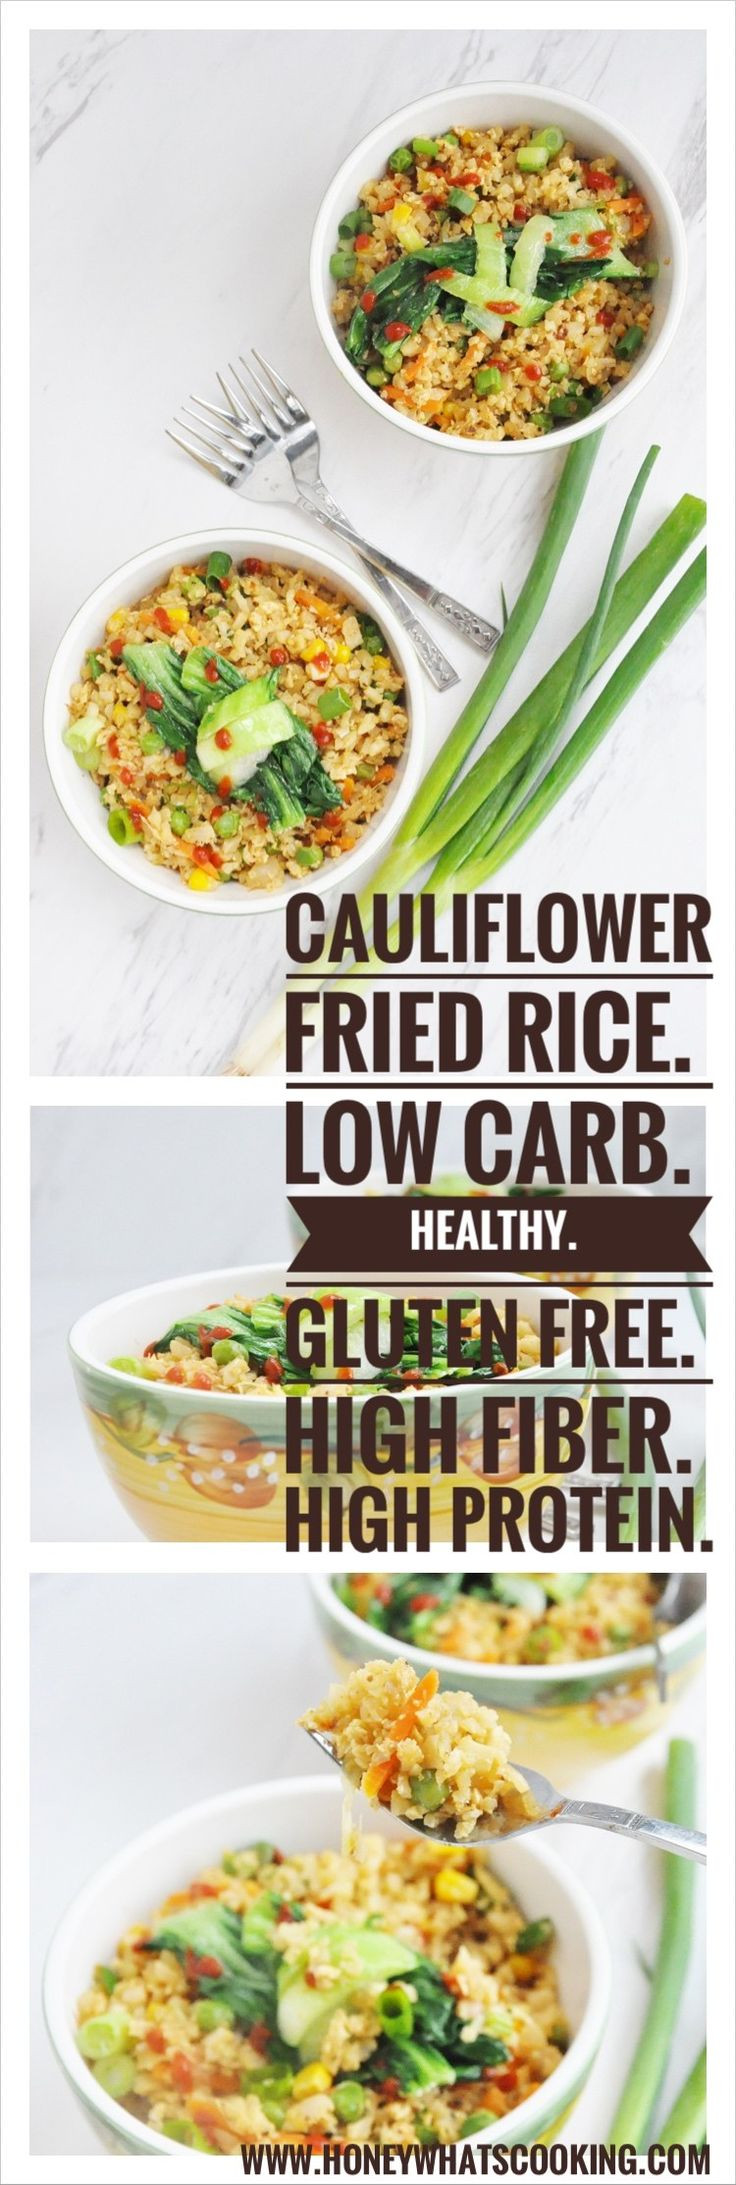 High Fiber Recipes For Dinner
 Best 25 High fiber foods ideas on Pinterest